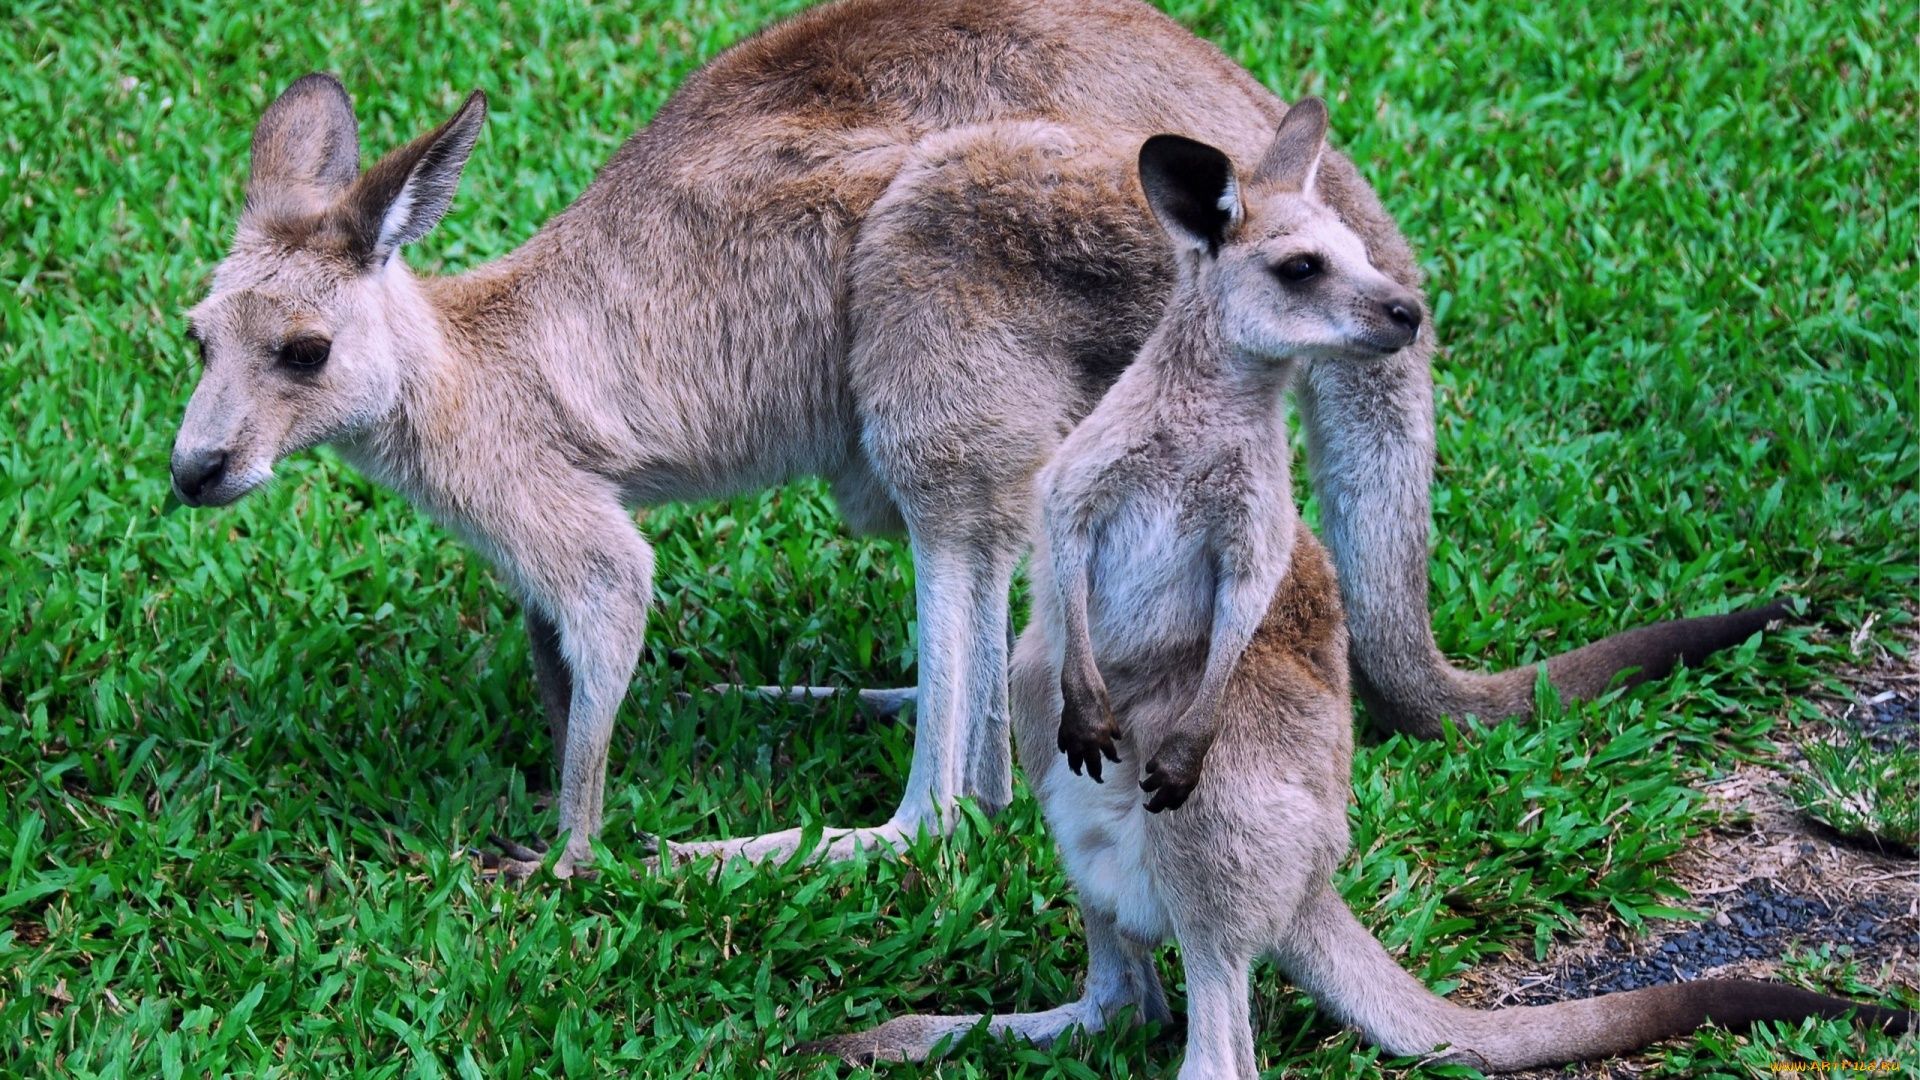 Photo With A Baby Kangaroo